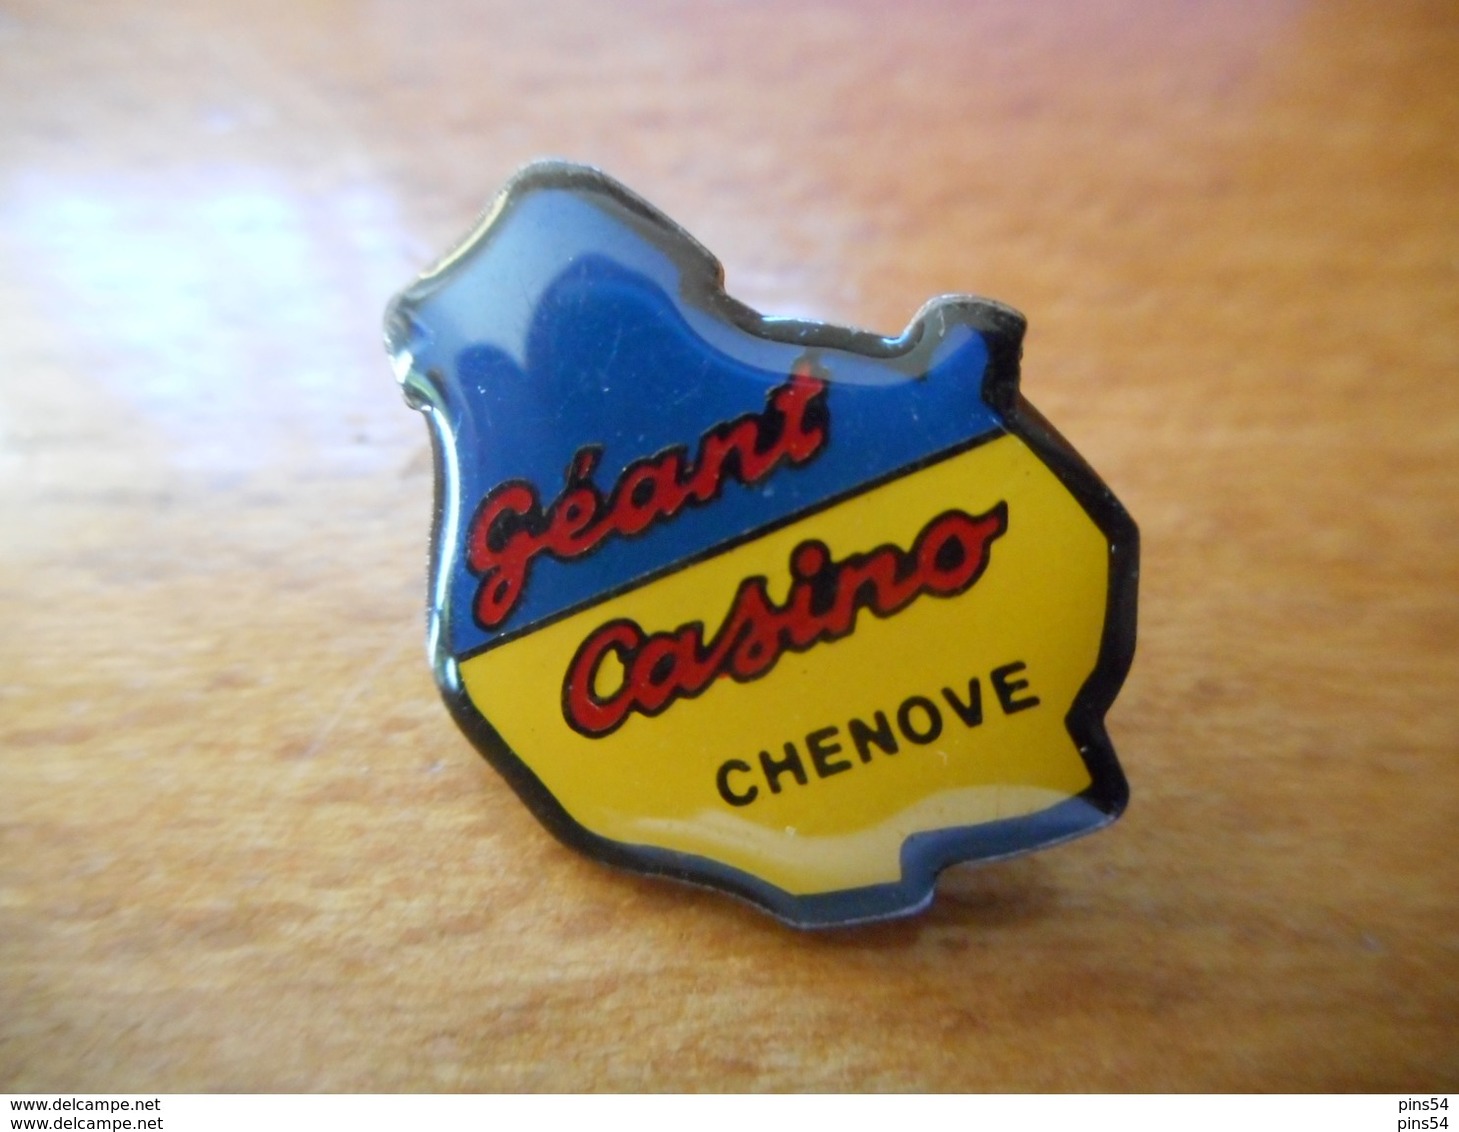 A016 -- Pin's Géant Casino Chenove - Merken